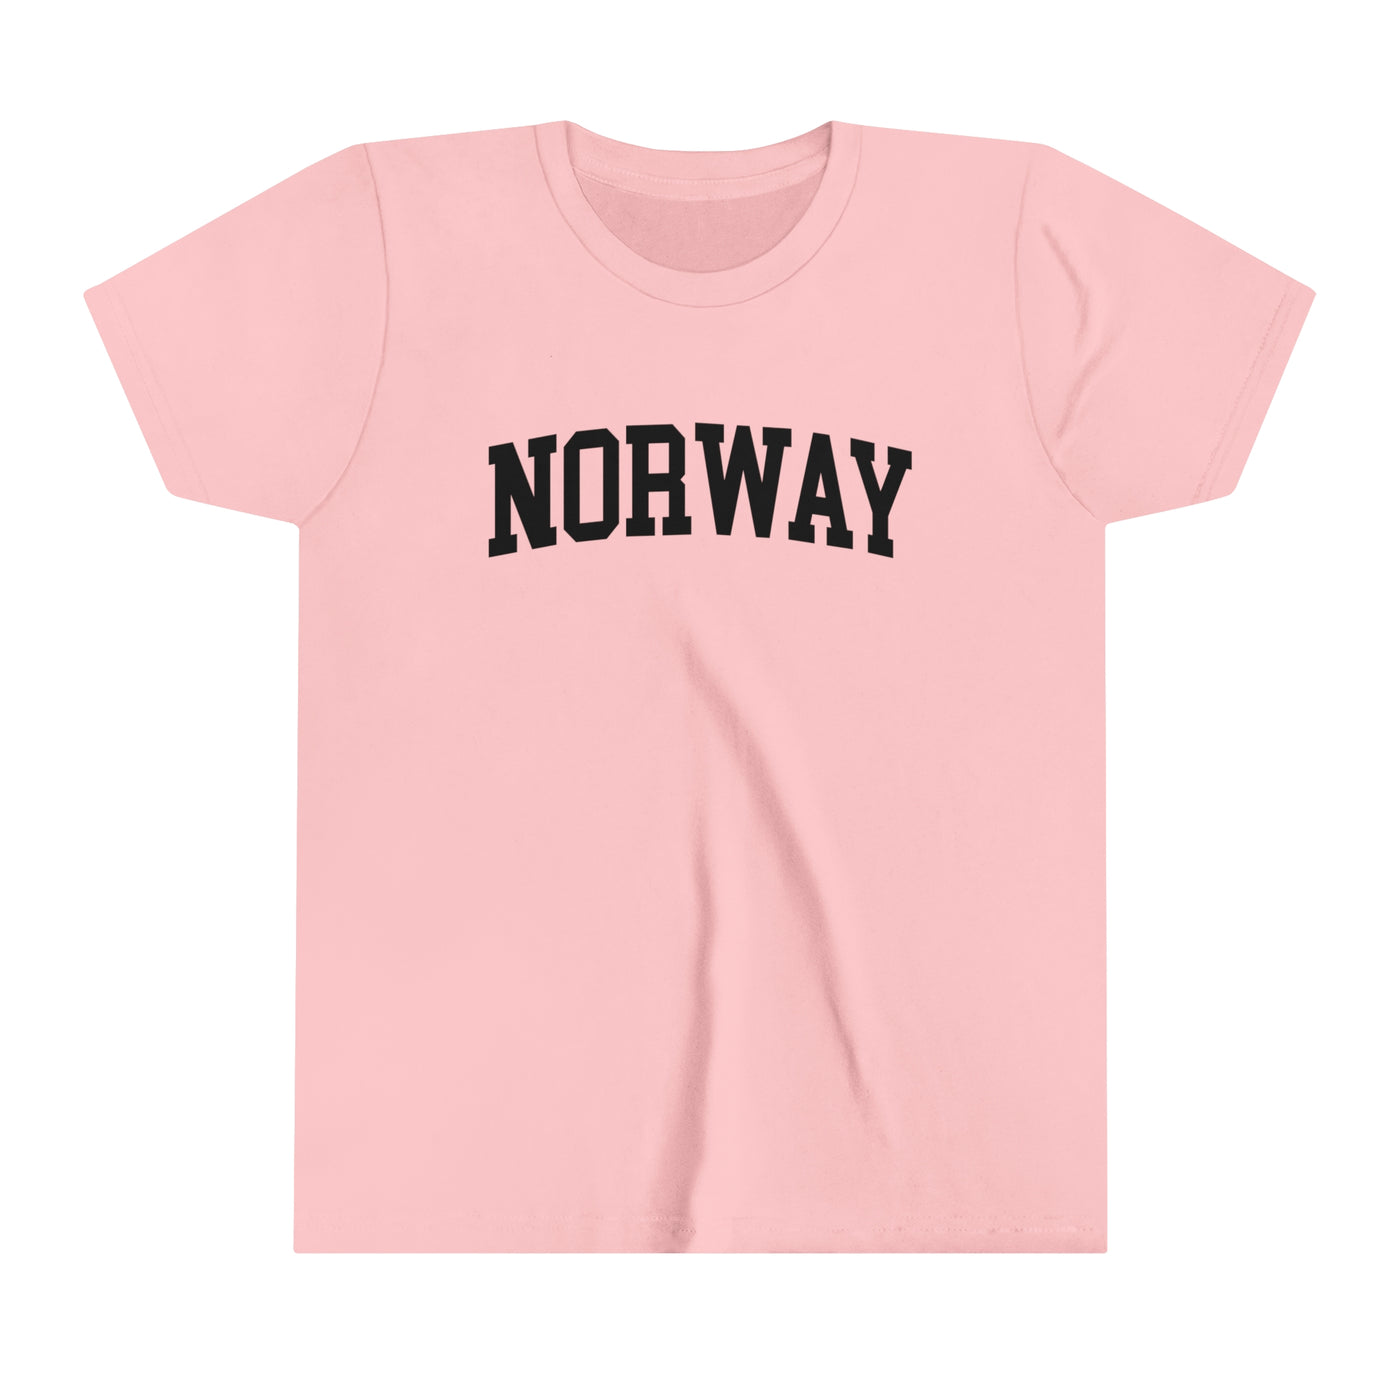 Norway University Kids T-Shirt